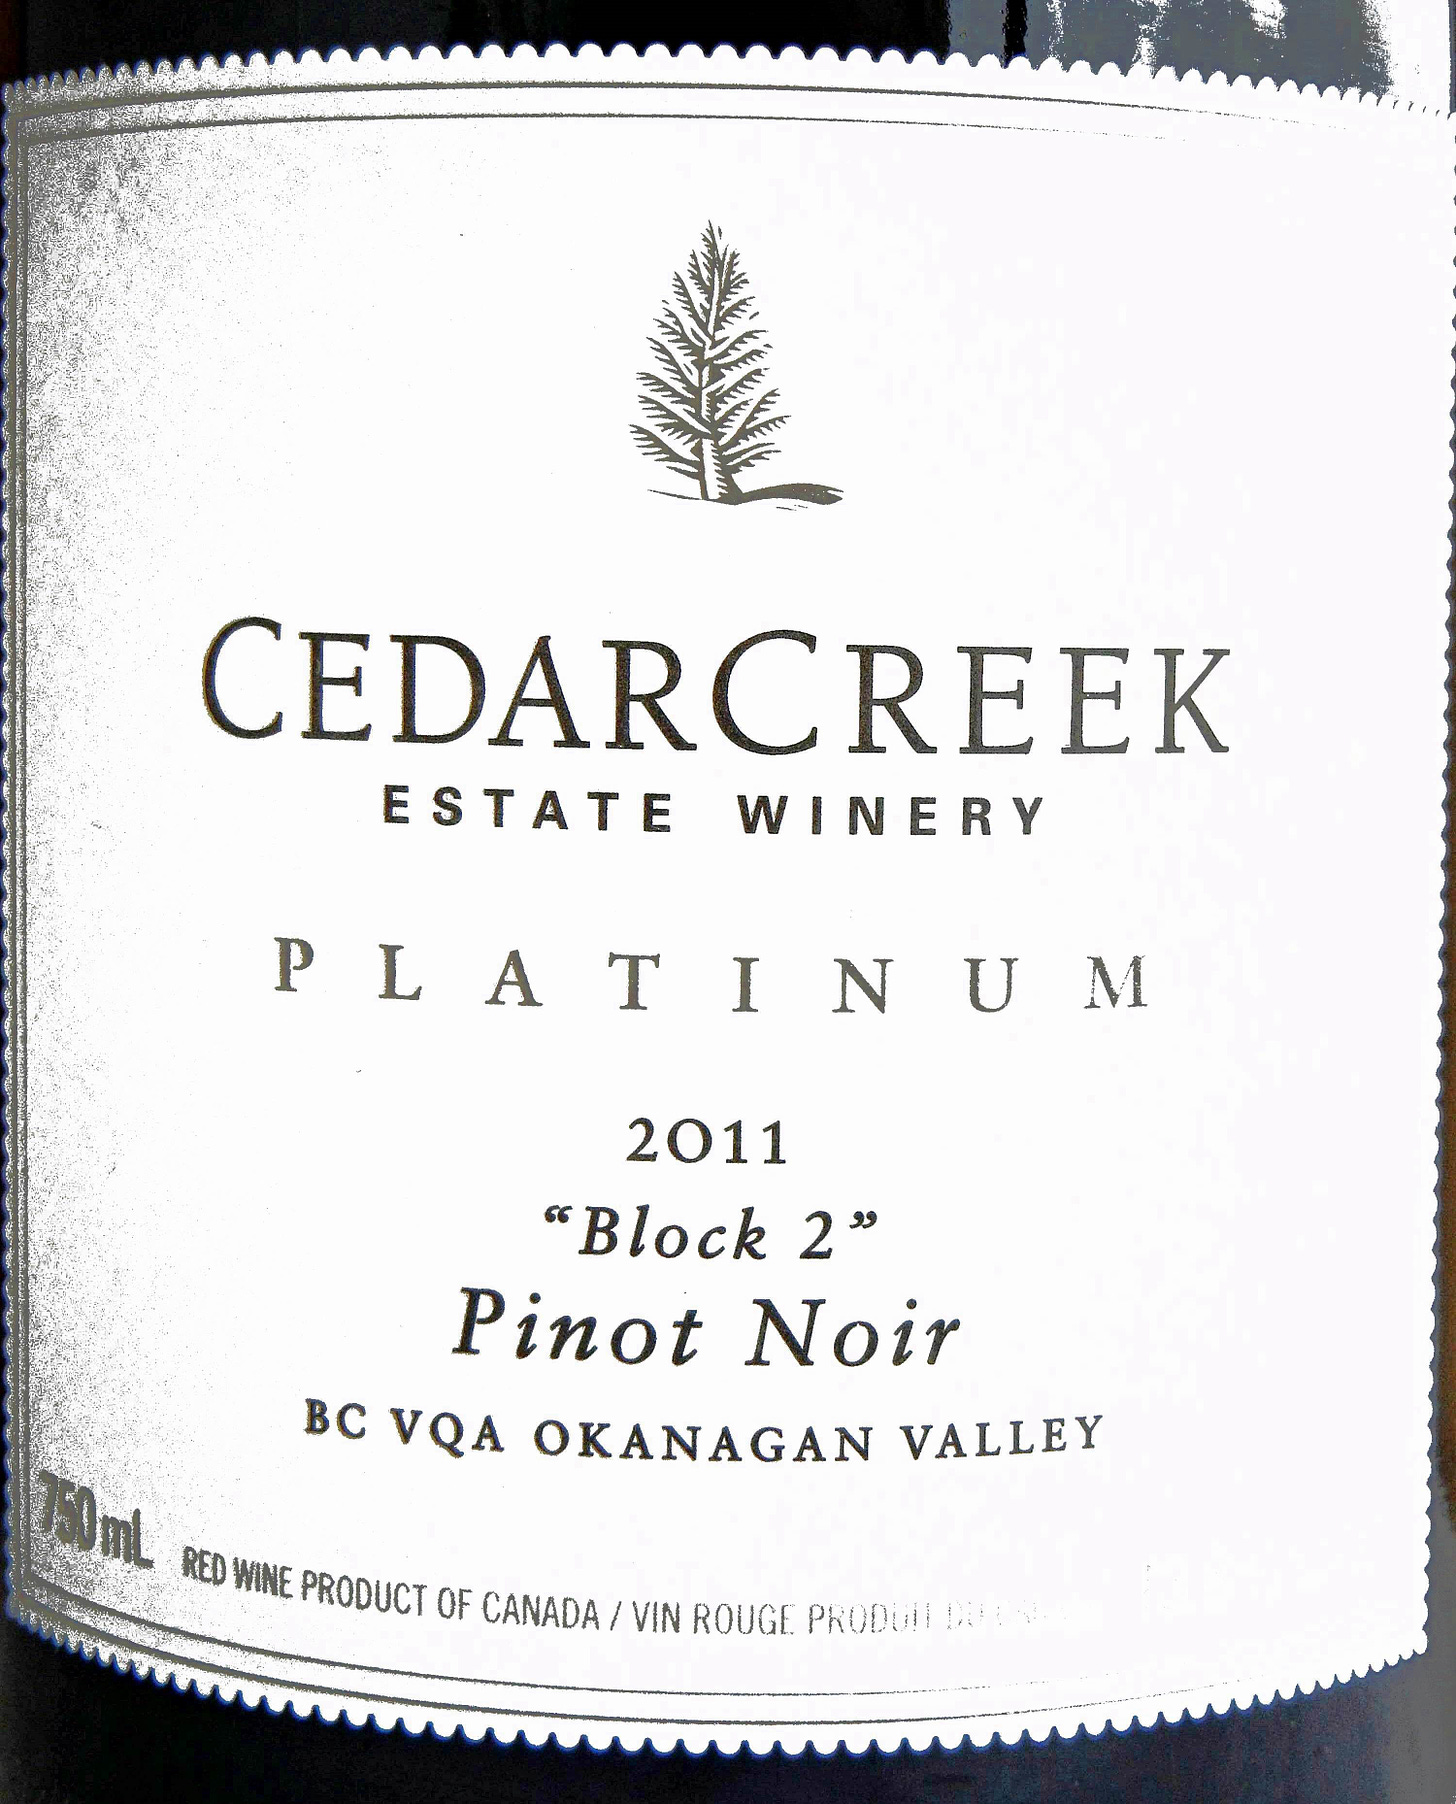 Cedar Creek Platinum Block 2 Pinot Noir 2011 Label - BC Pinot Noir Tasting Review 17